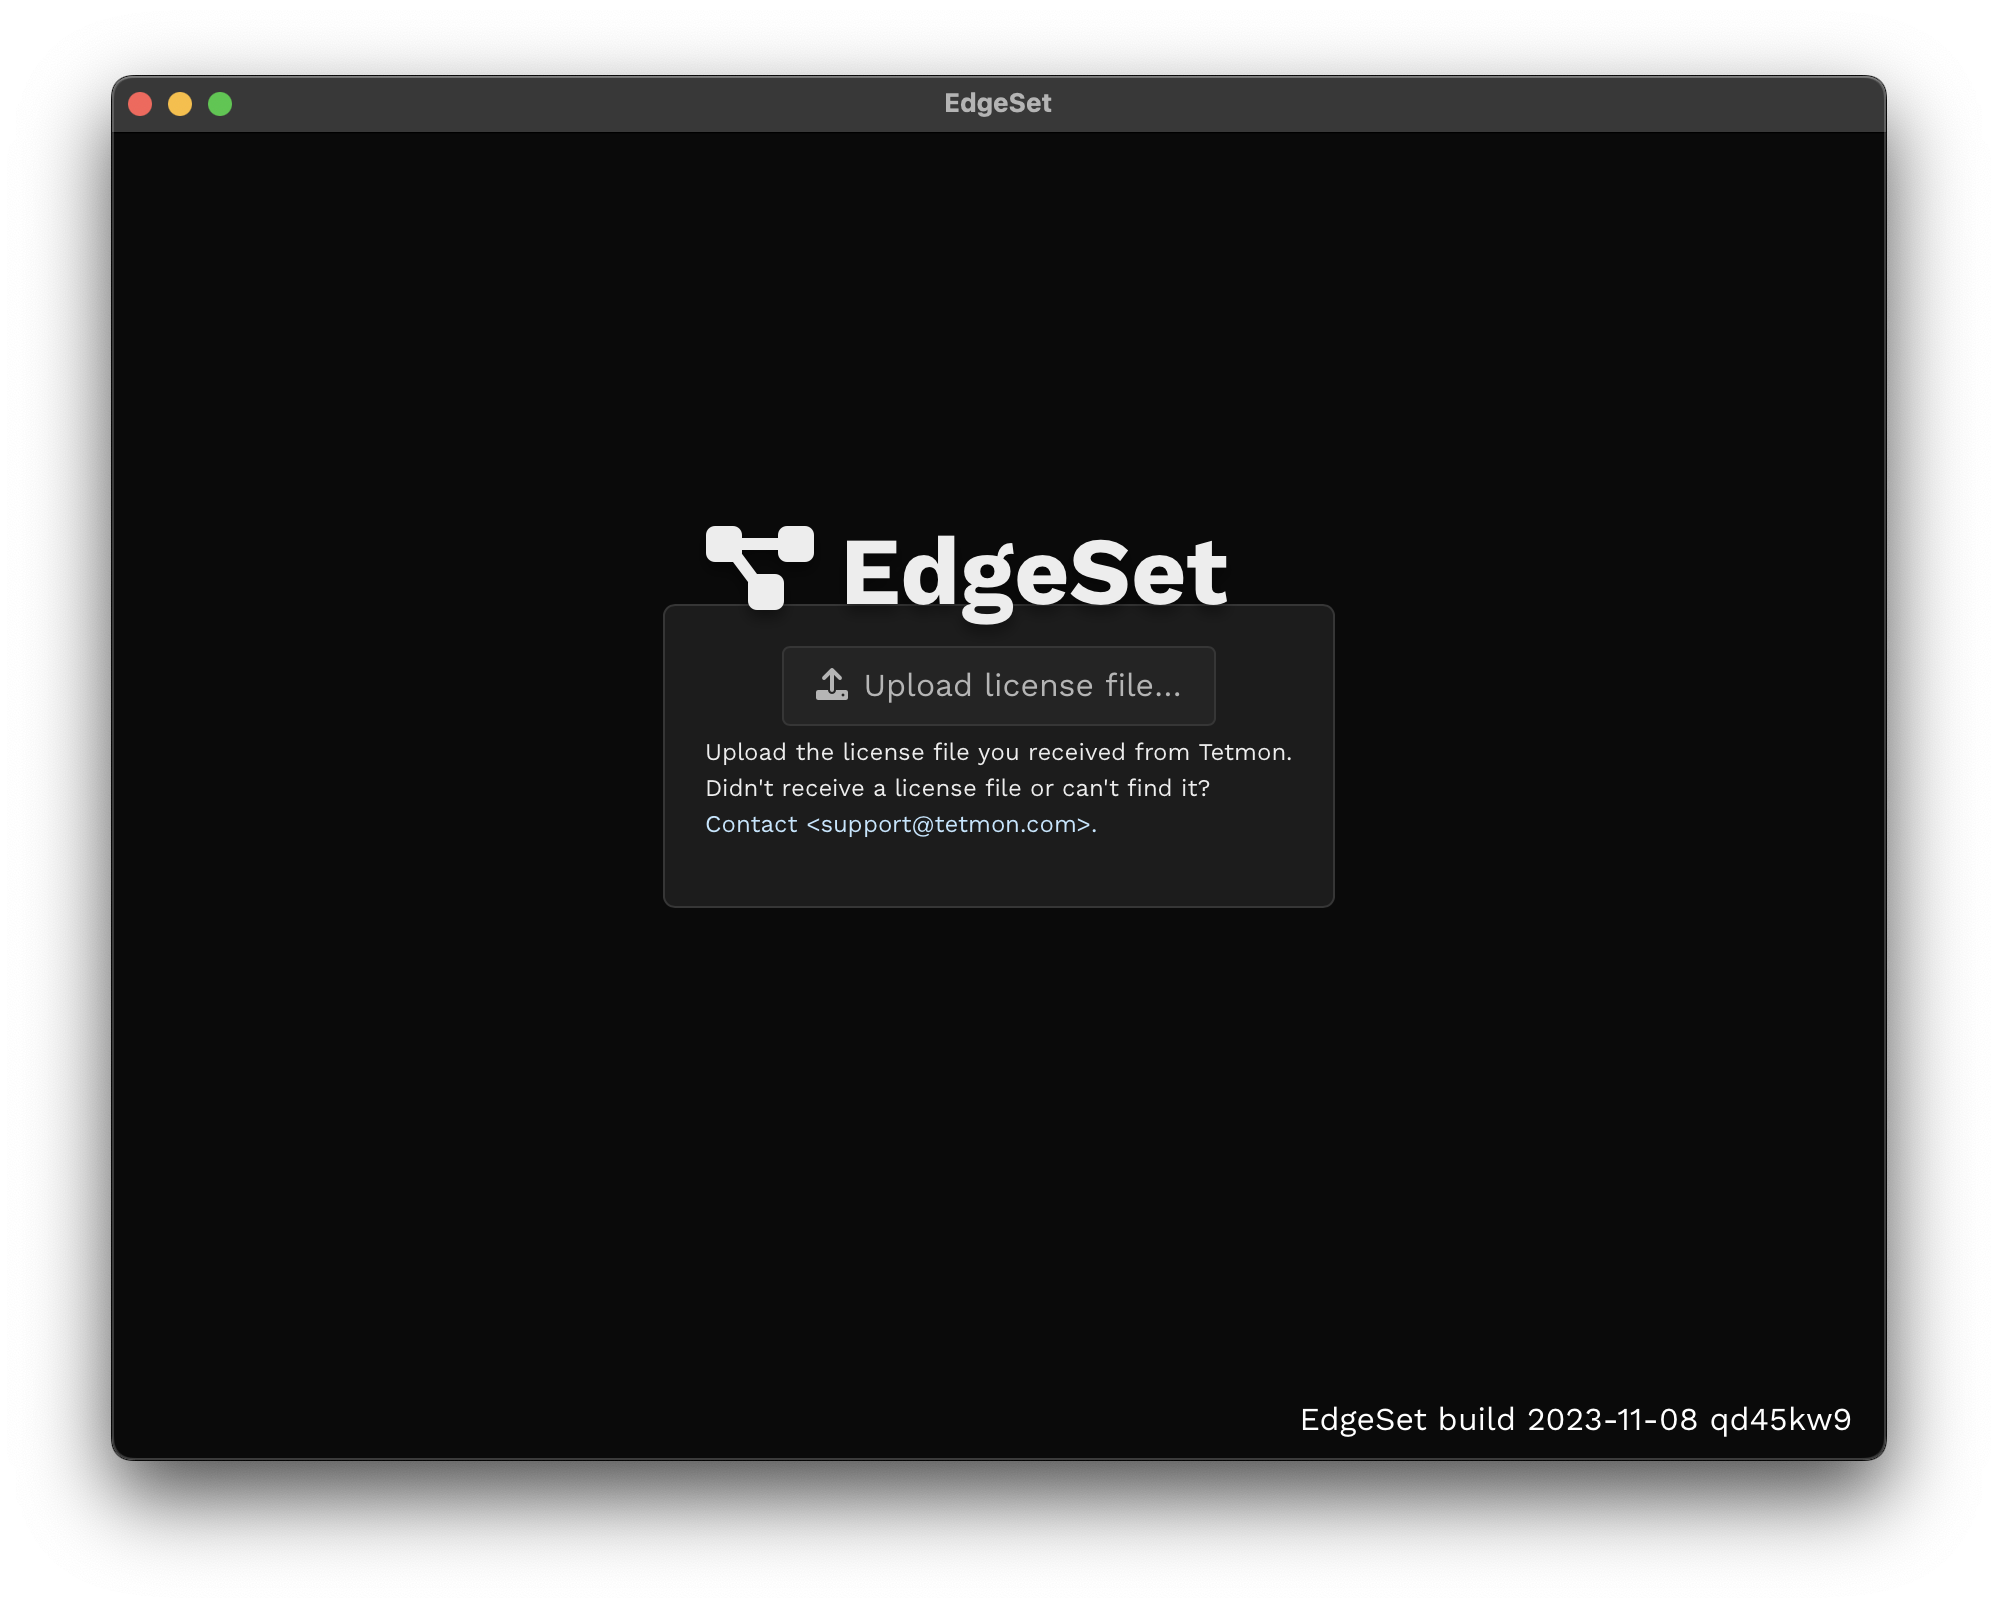 EdgeSet upload license key dialog